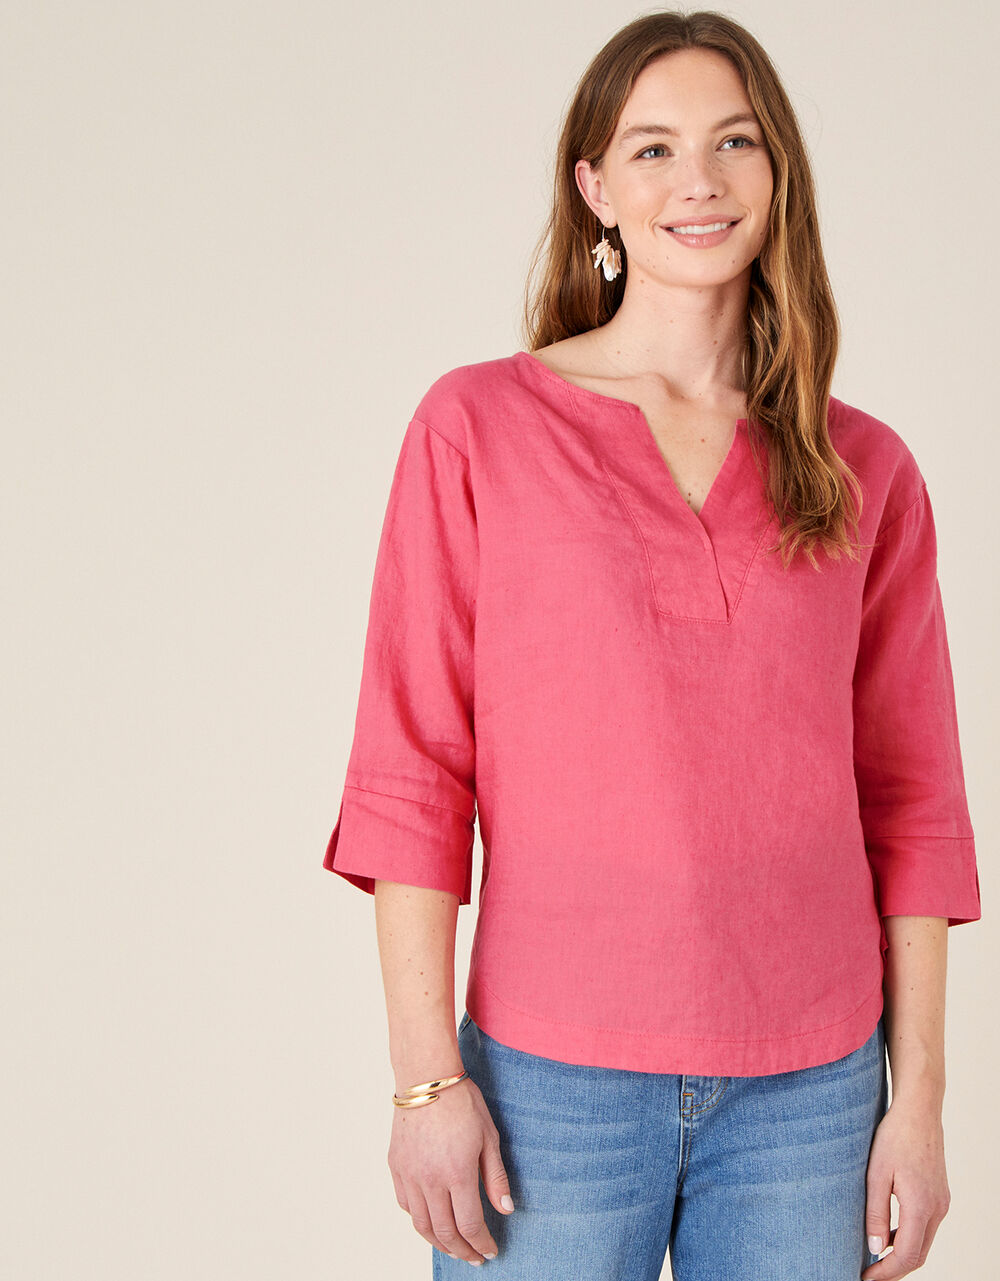 Women Women's Clothing | Daisy Plain T-Shirt in Pure Linen Red - DT85042